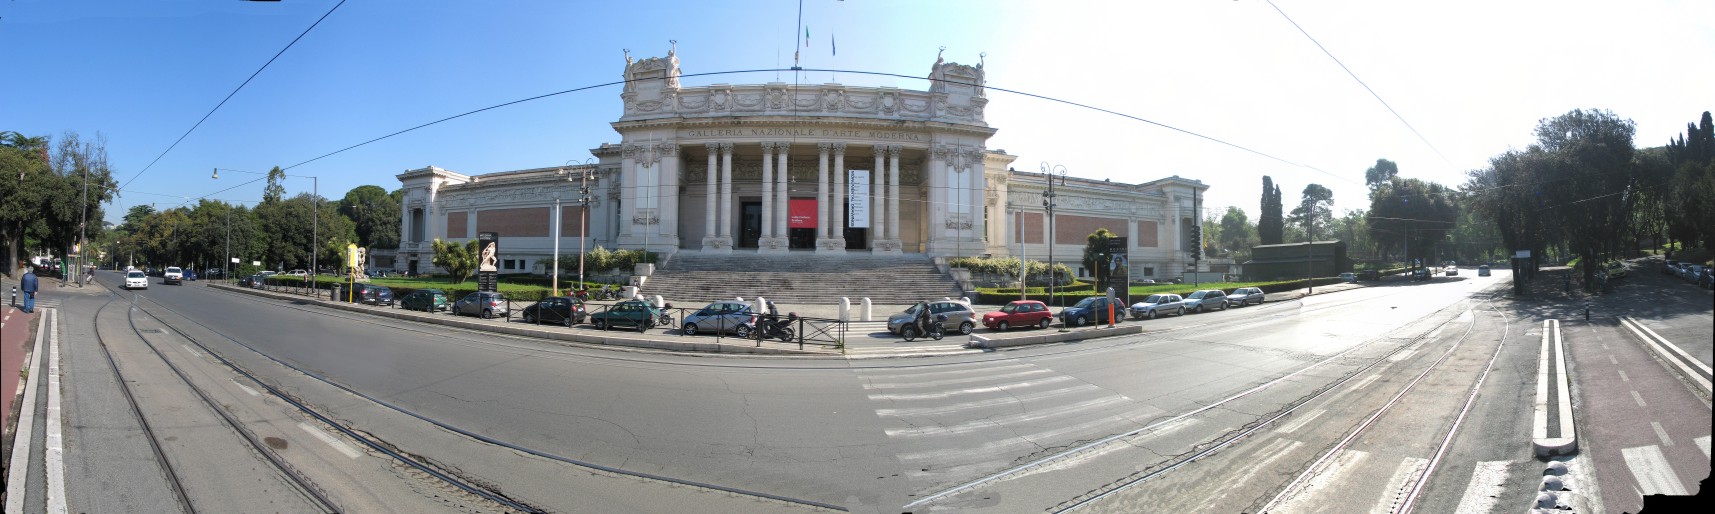 Galleria Nazionale d'Arte Moderna e Contemporanea - GNAM ...